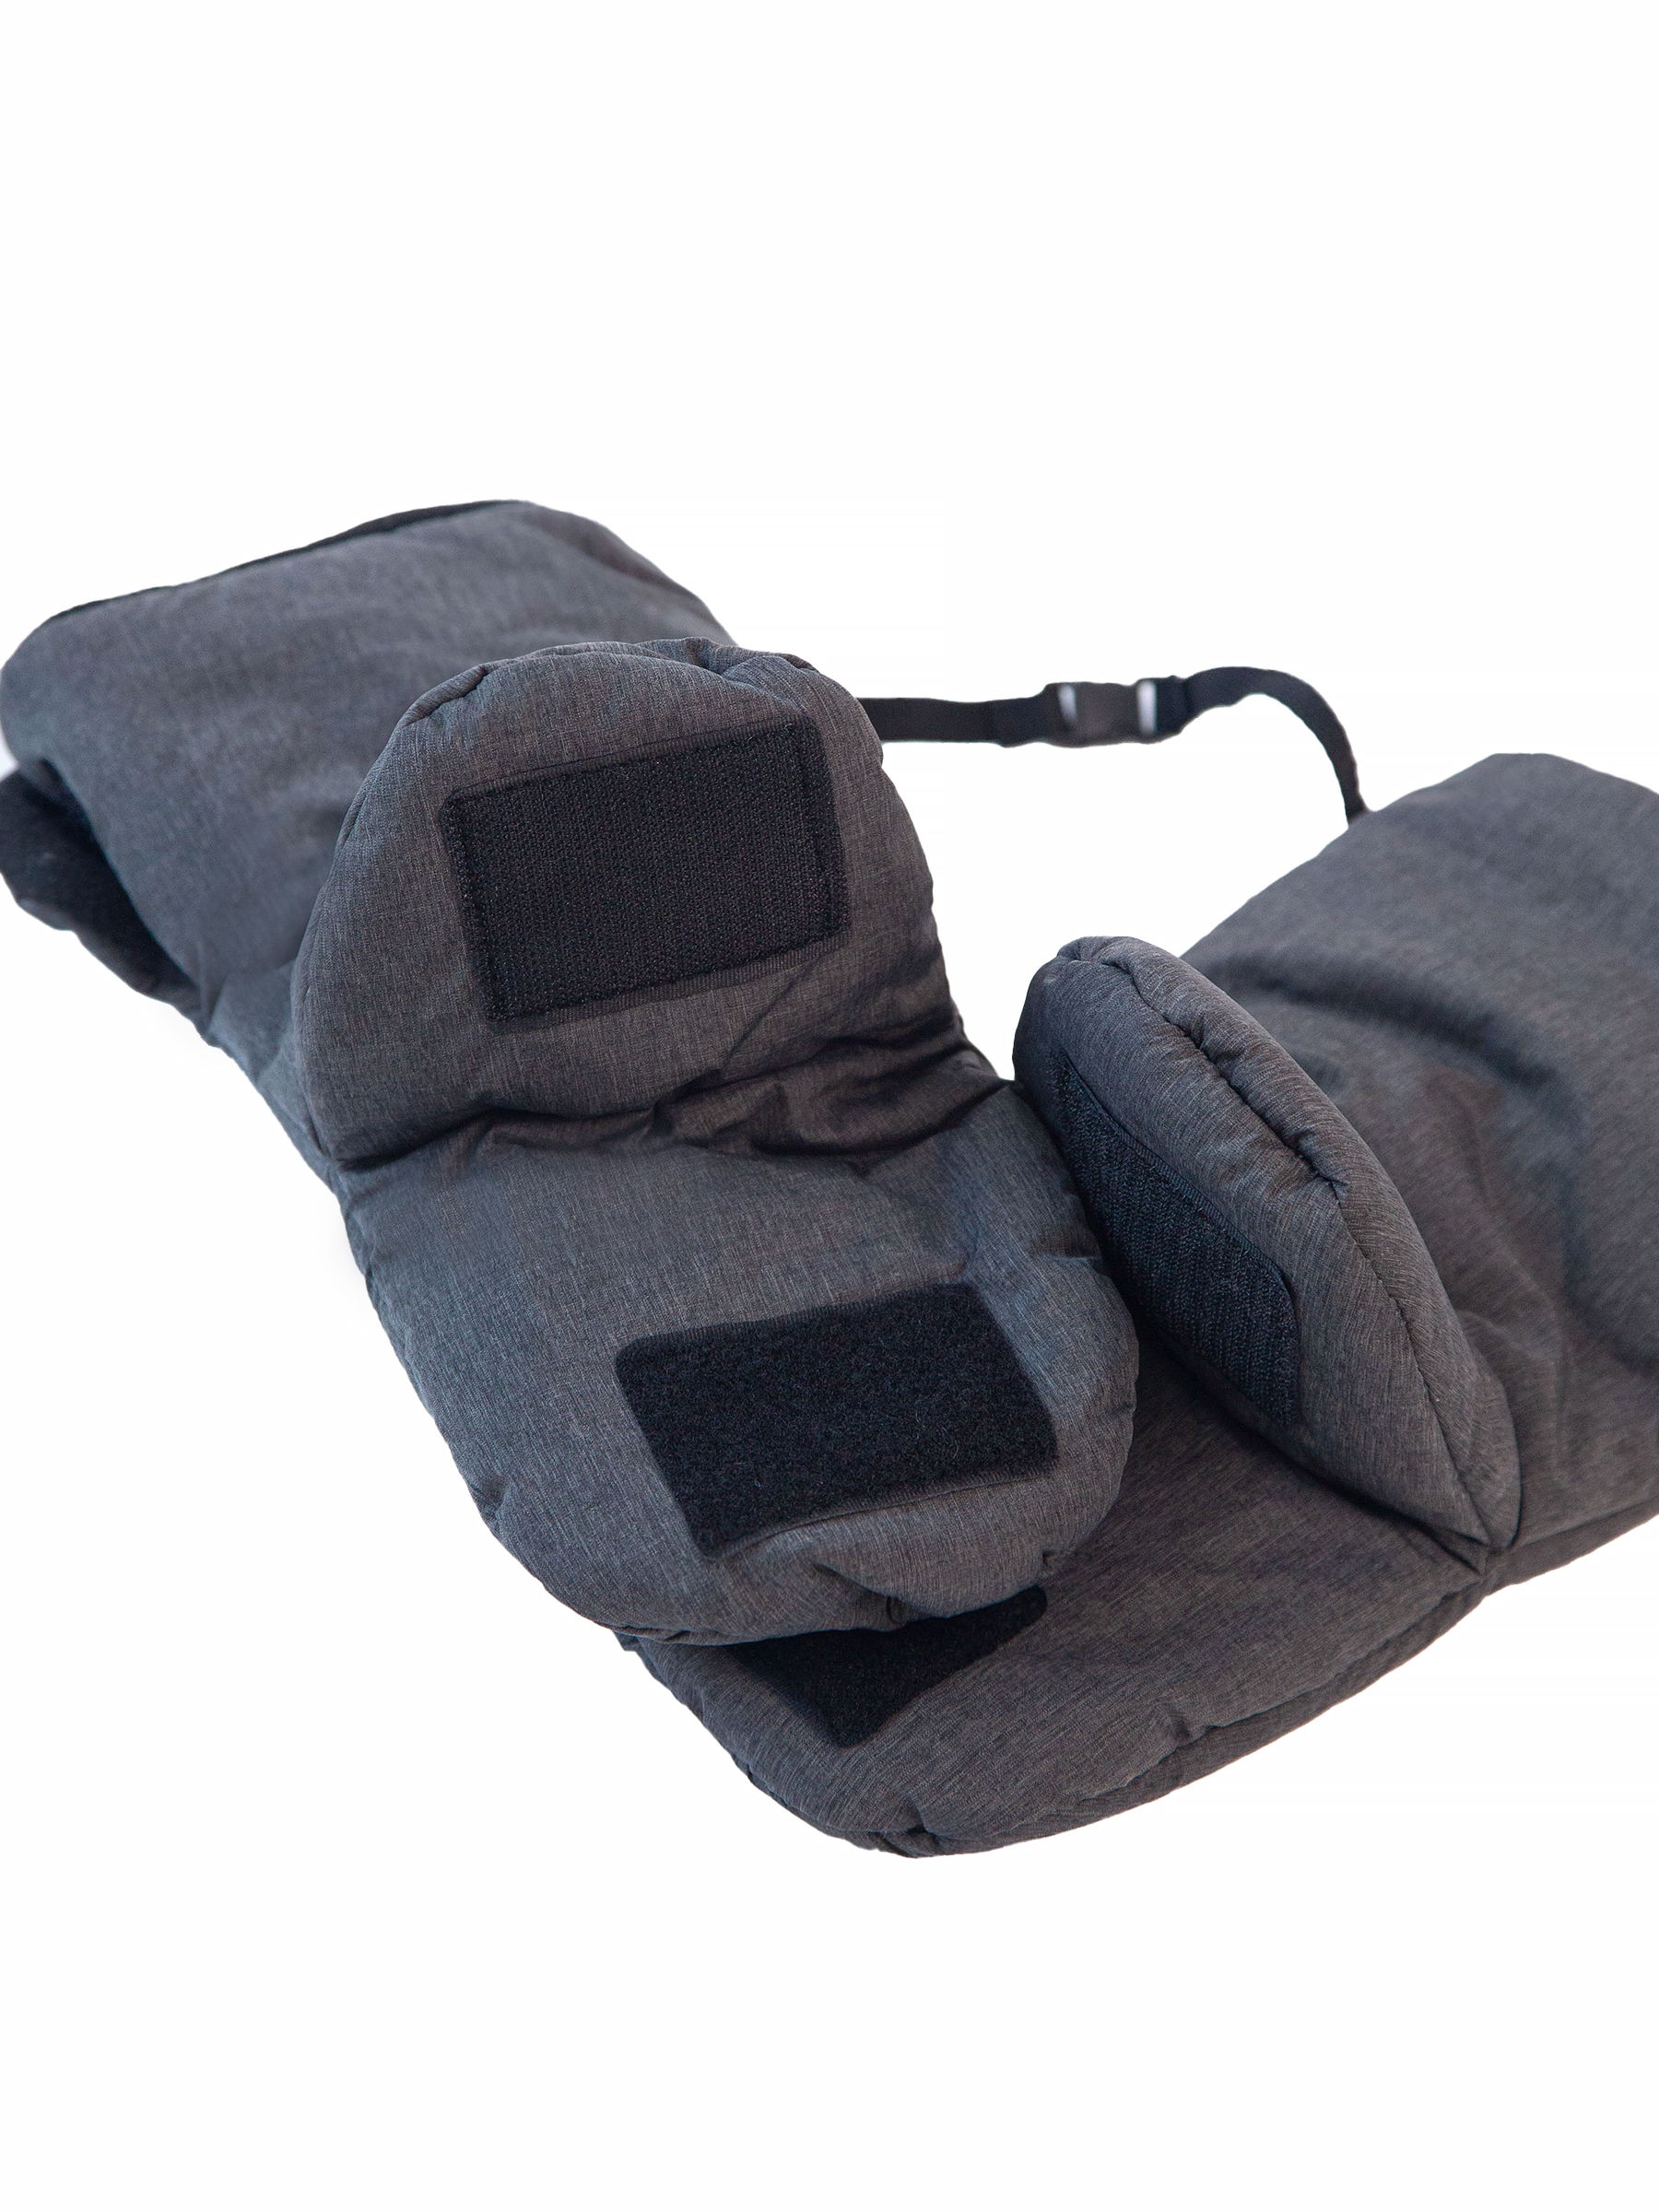 Муфты для рук StrollerAcss на коляску и санки SA777/серый-меланж - фото 3